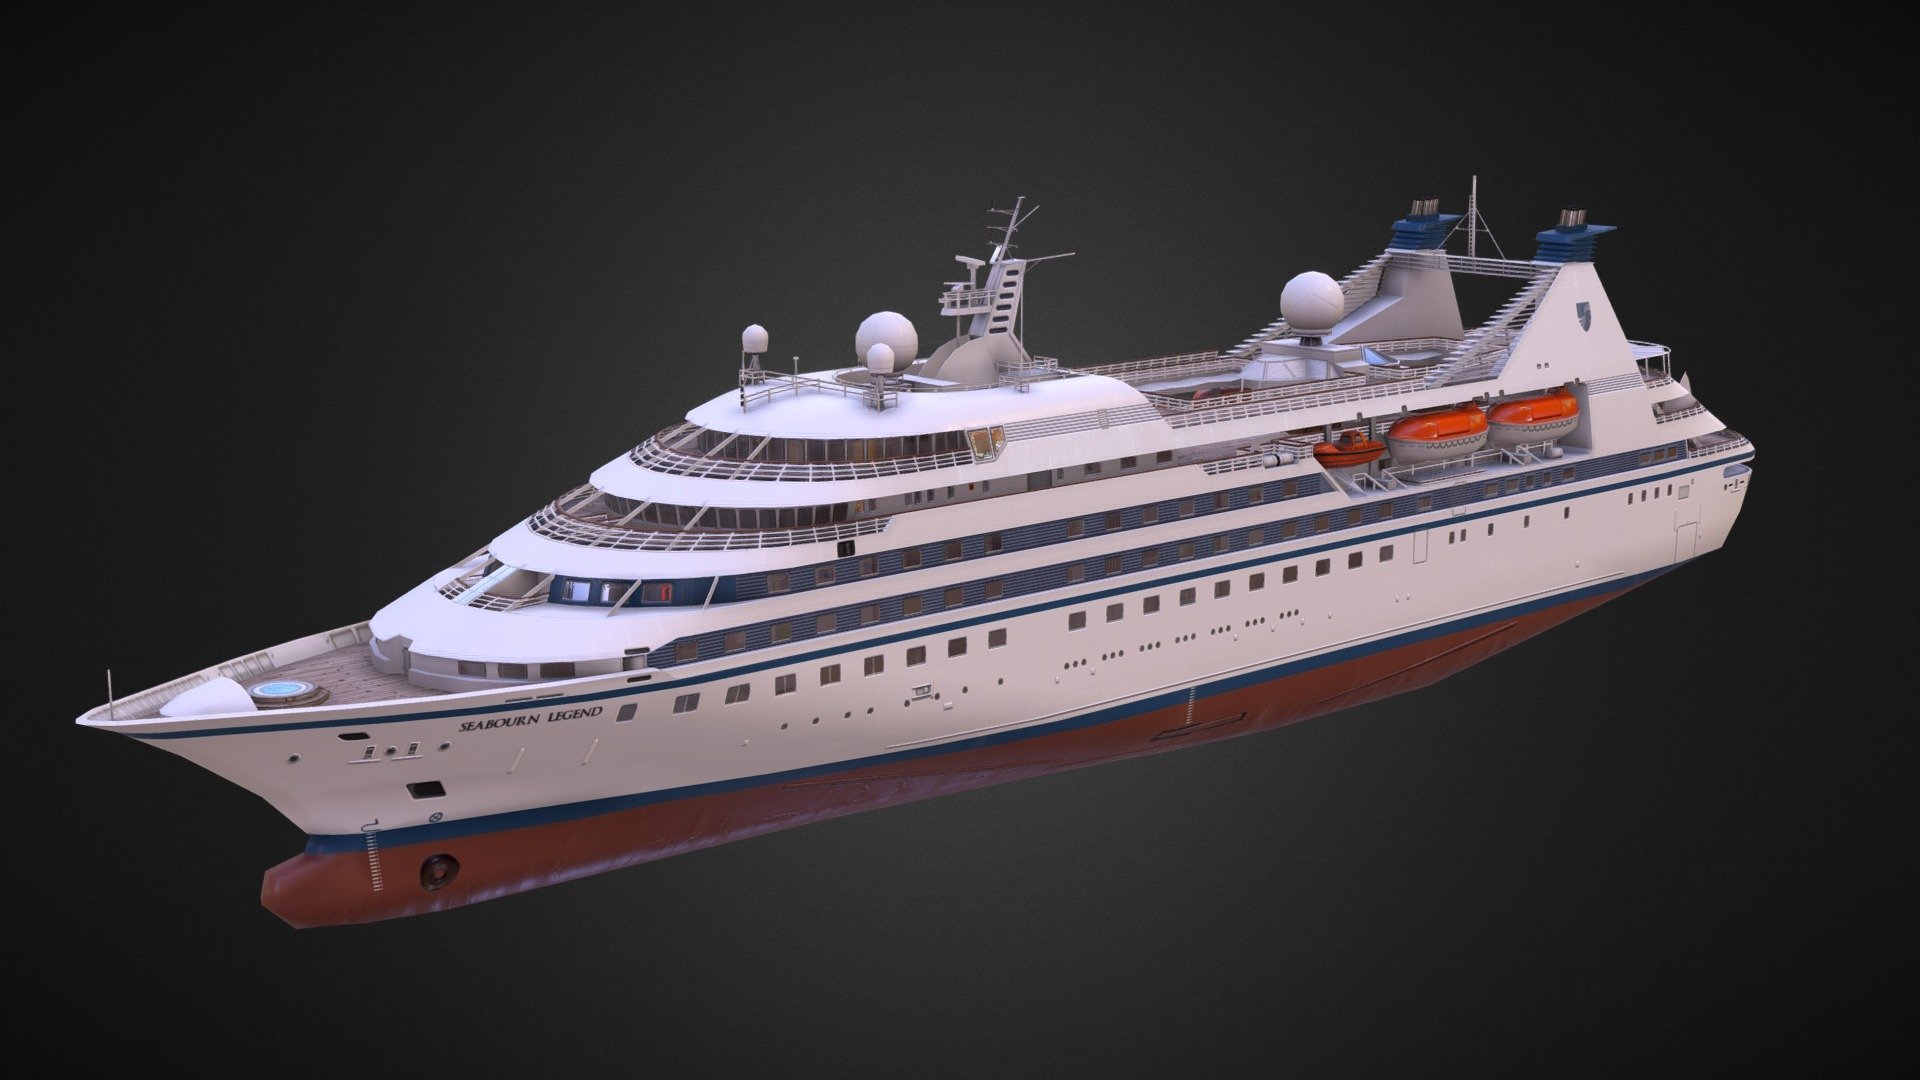 Seabourn Legend Cruise Ship 3d Model By Enterprise E Enterprise E 58dc1d7